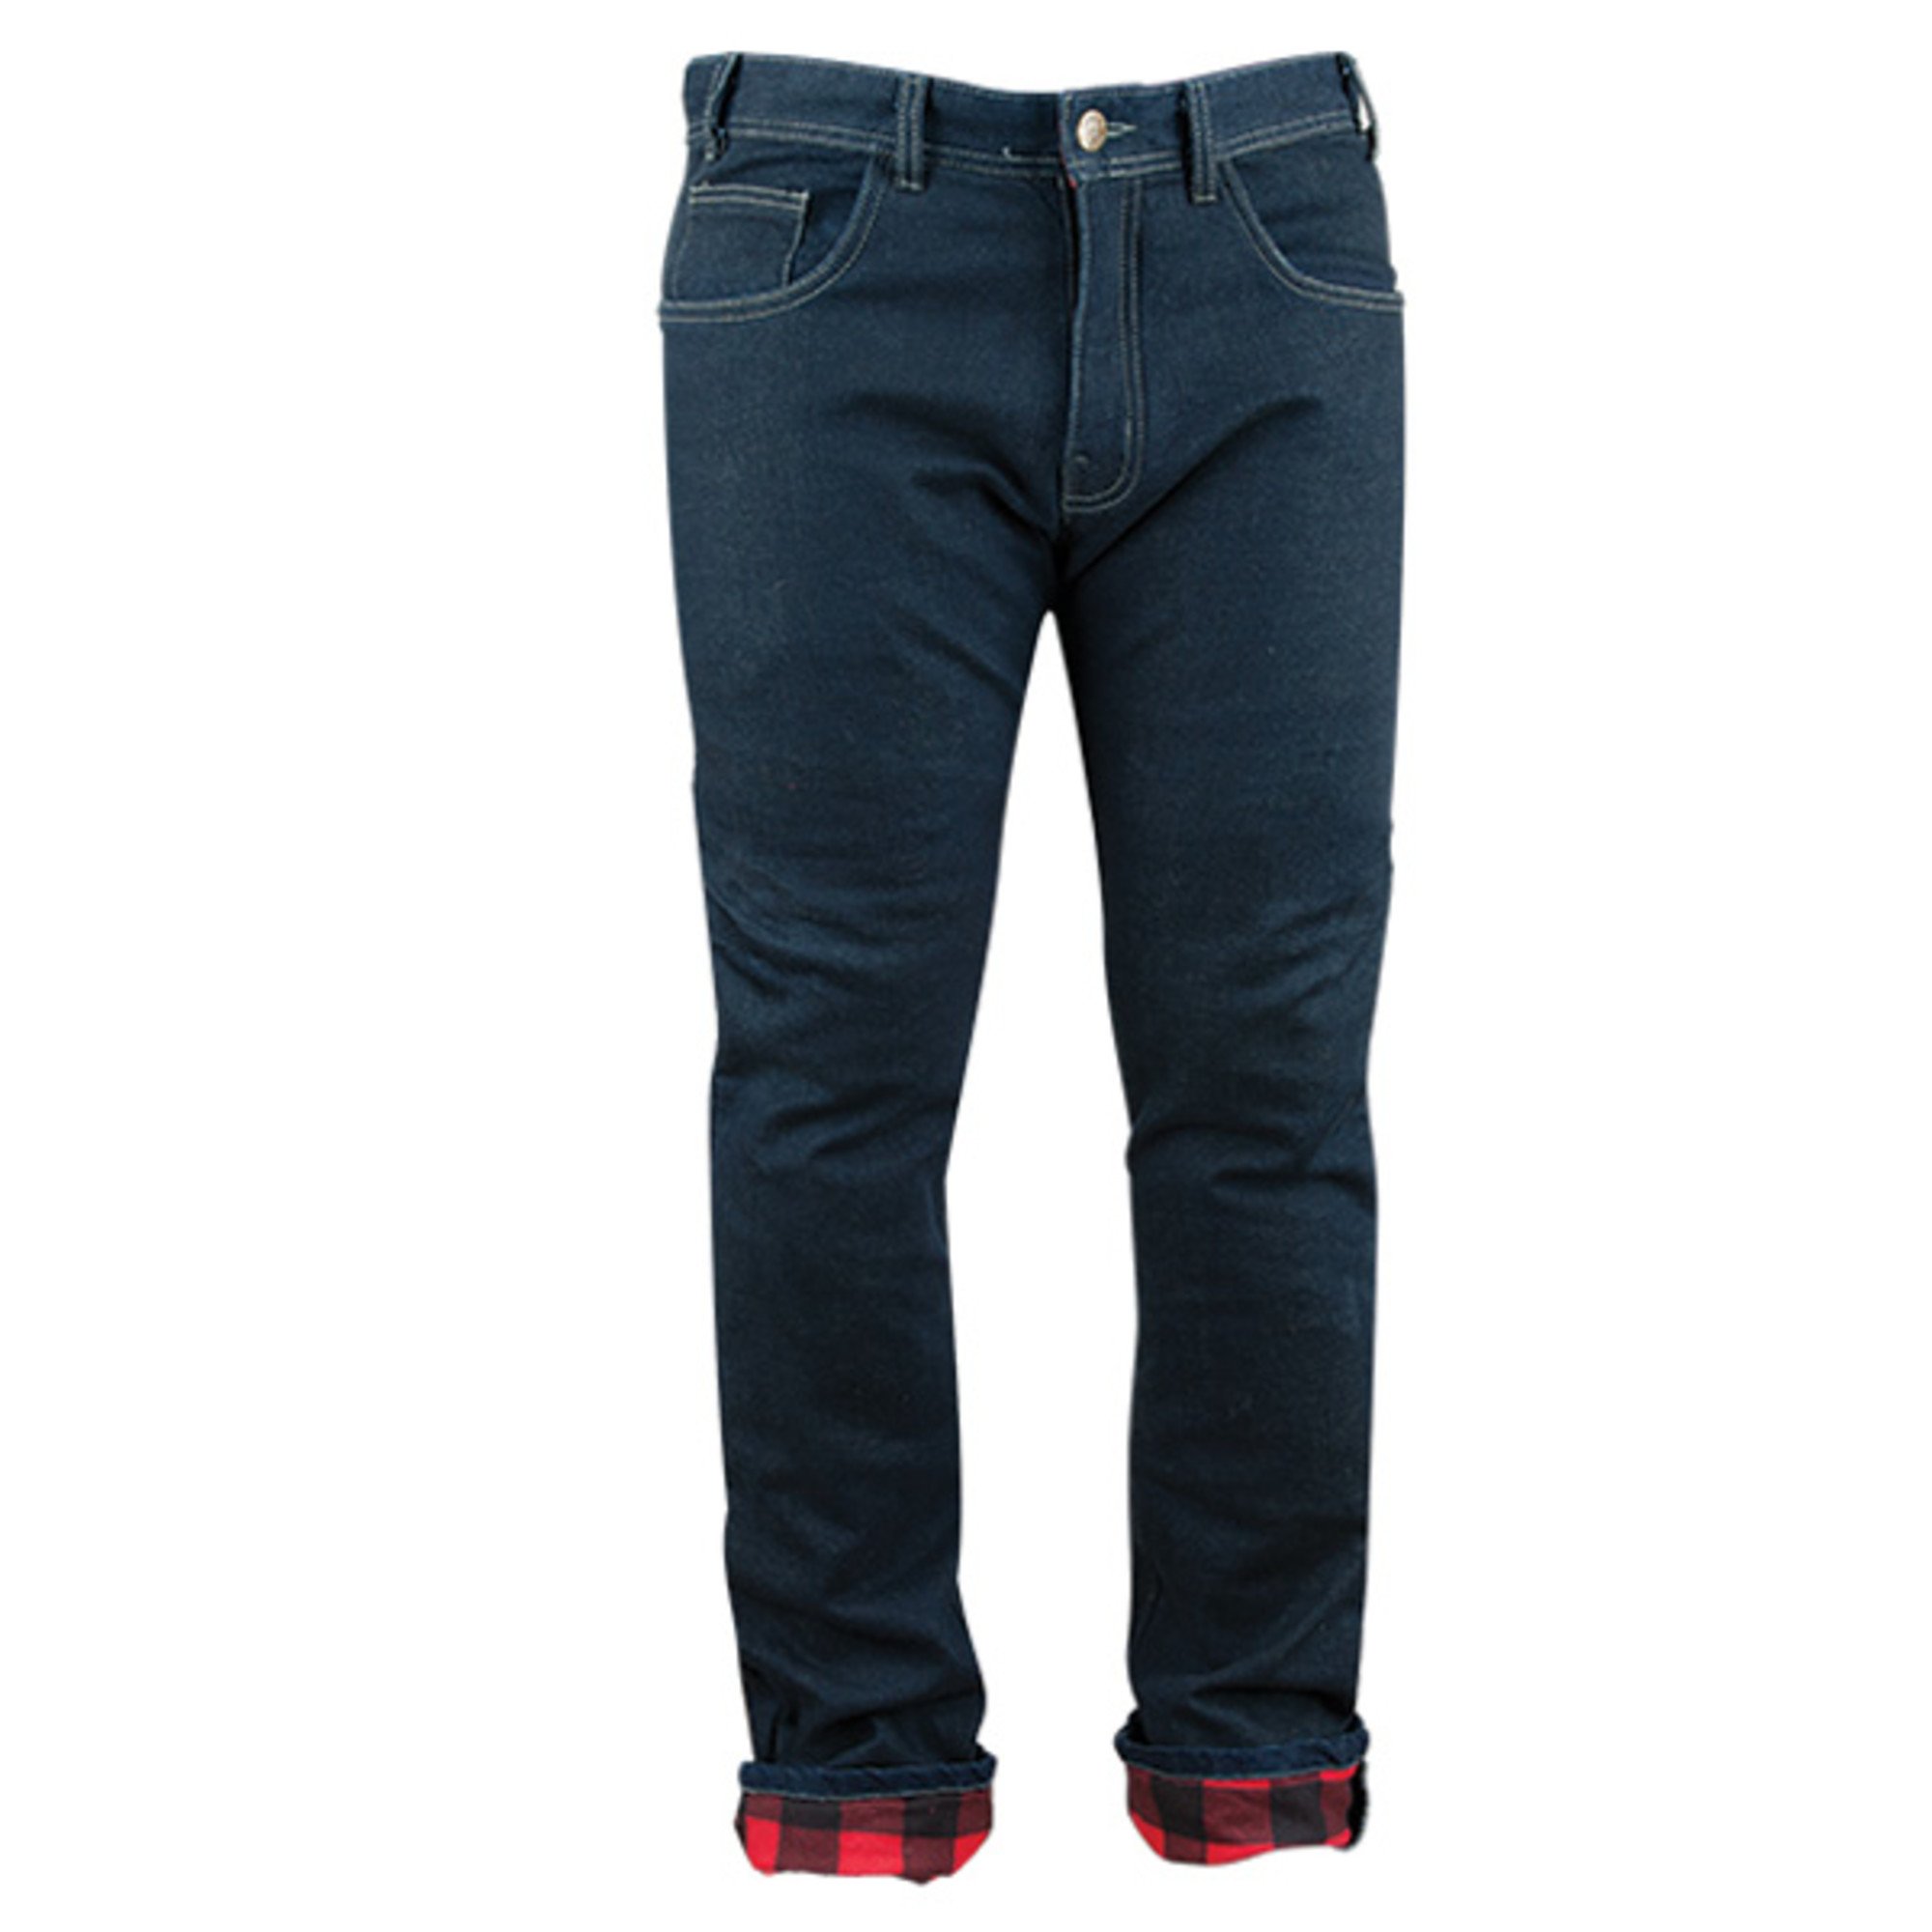 joe rocket textile pants for men true north lined jeans